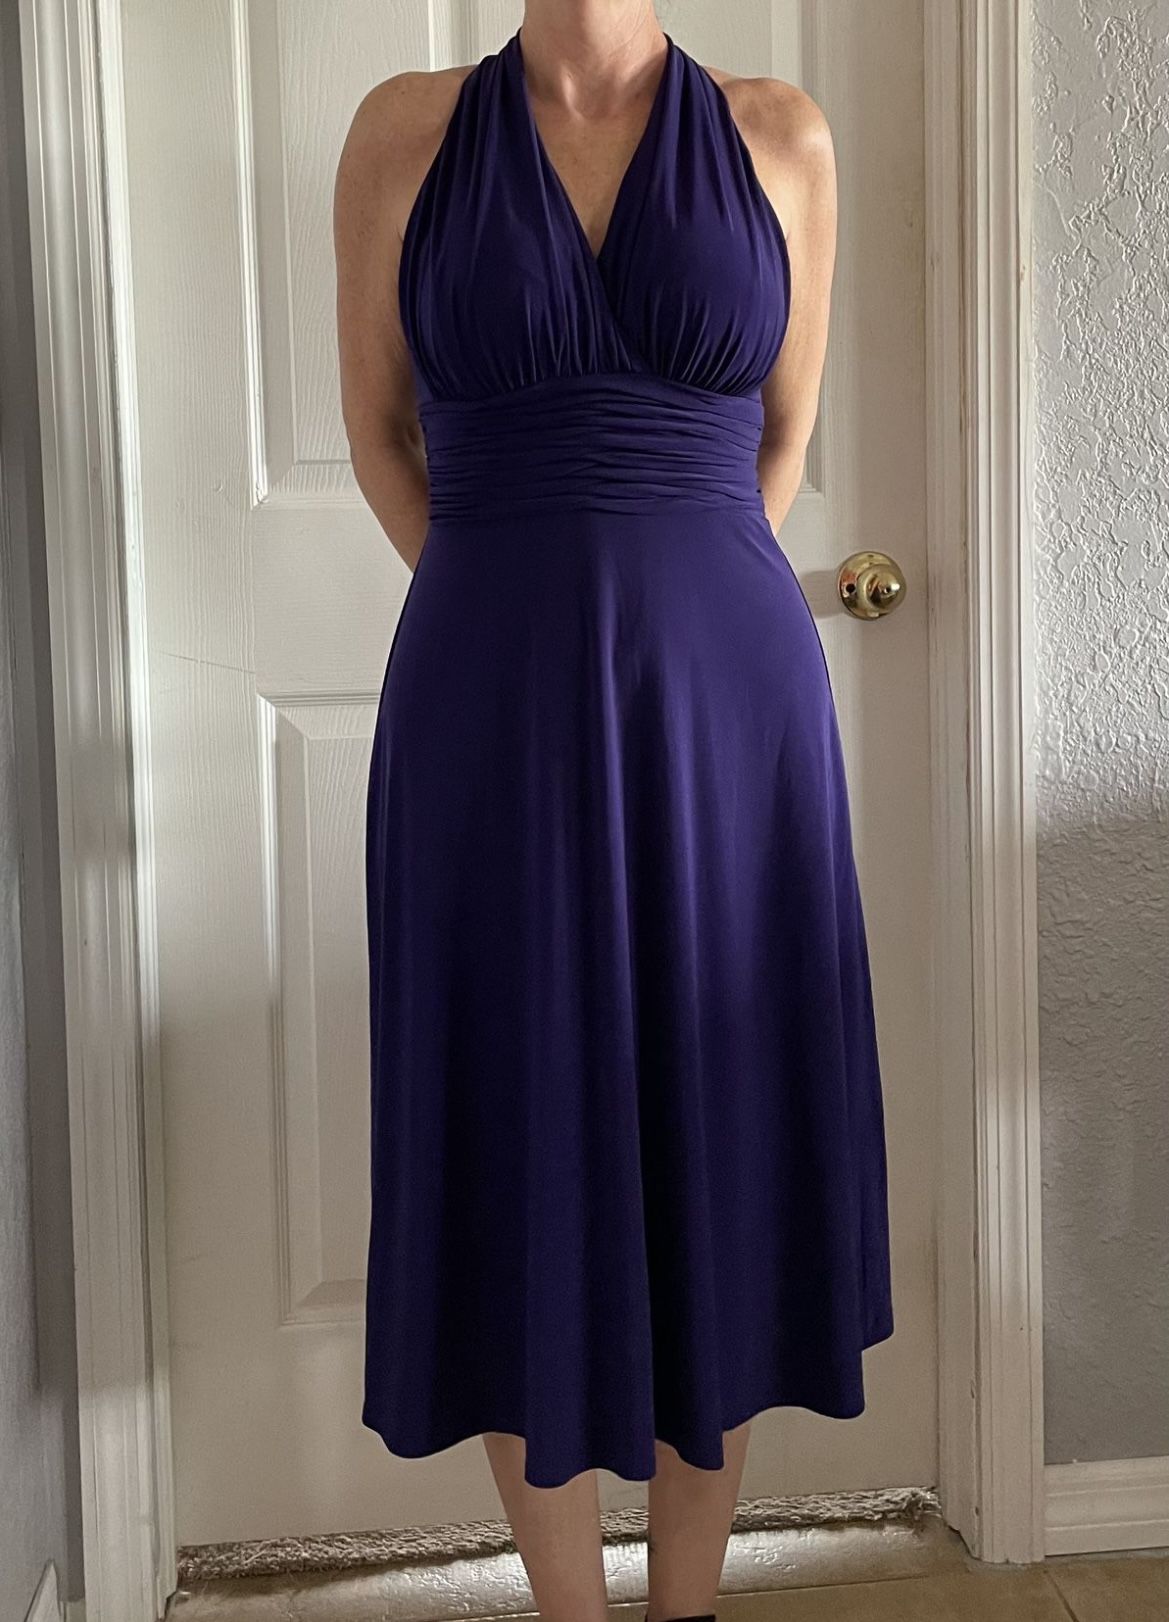 Beautiful Formal Purple Dress